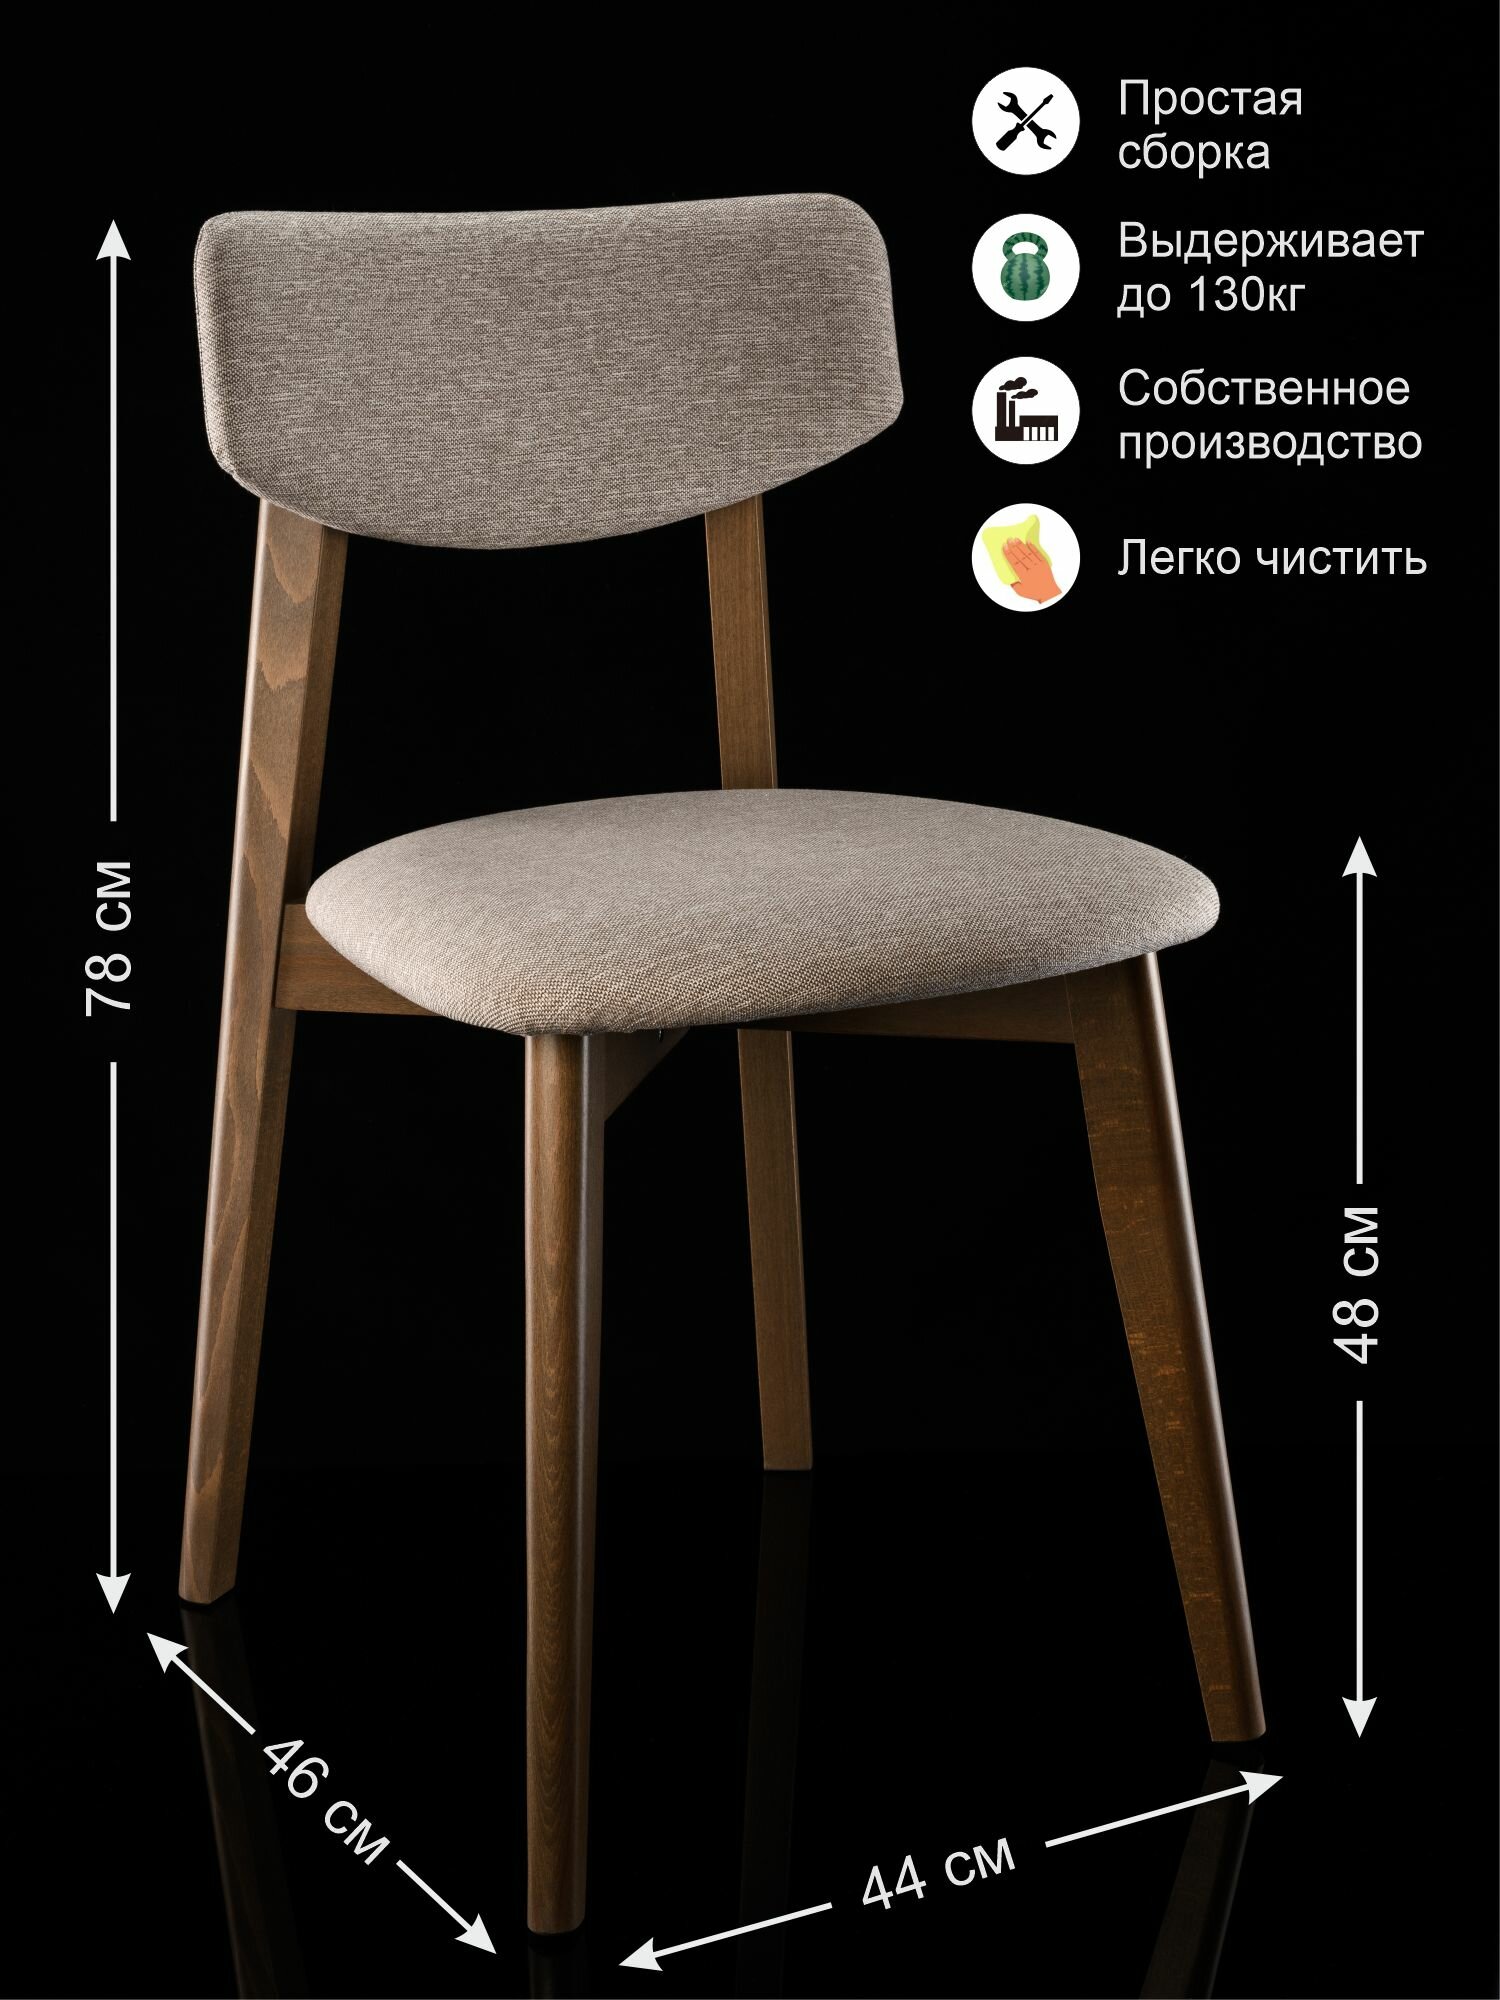 Мягкий кухонный стул со спинкой, деревянный ВС/145, виста